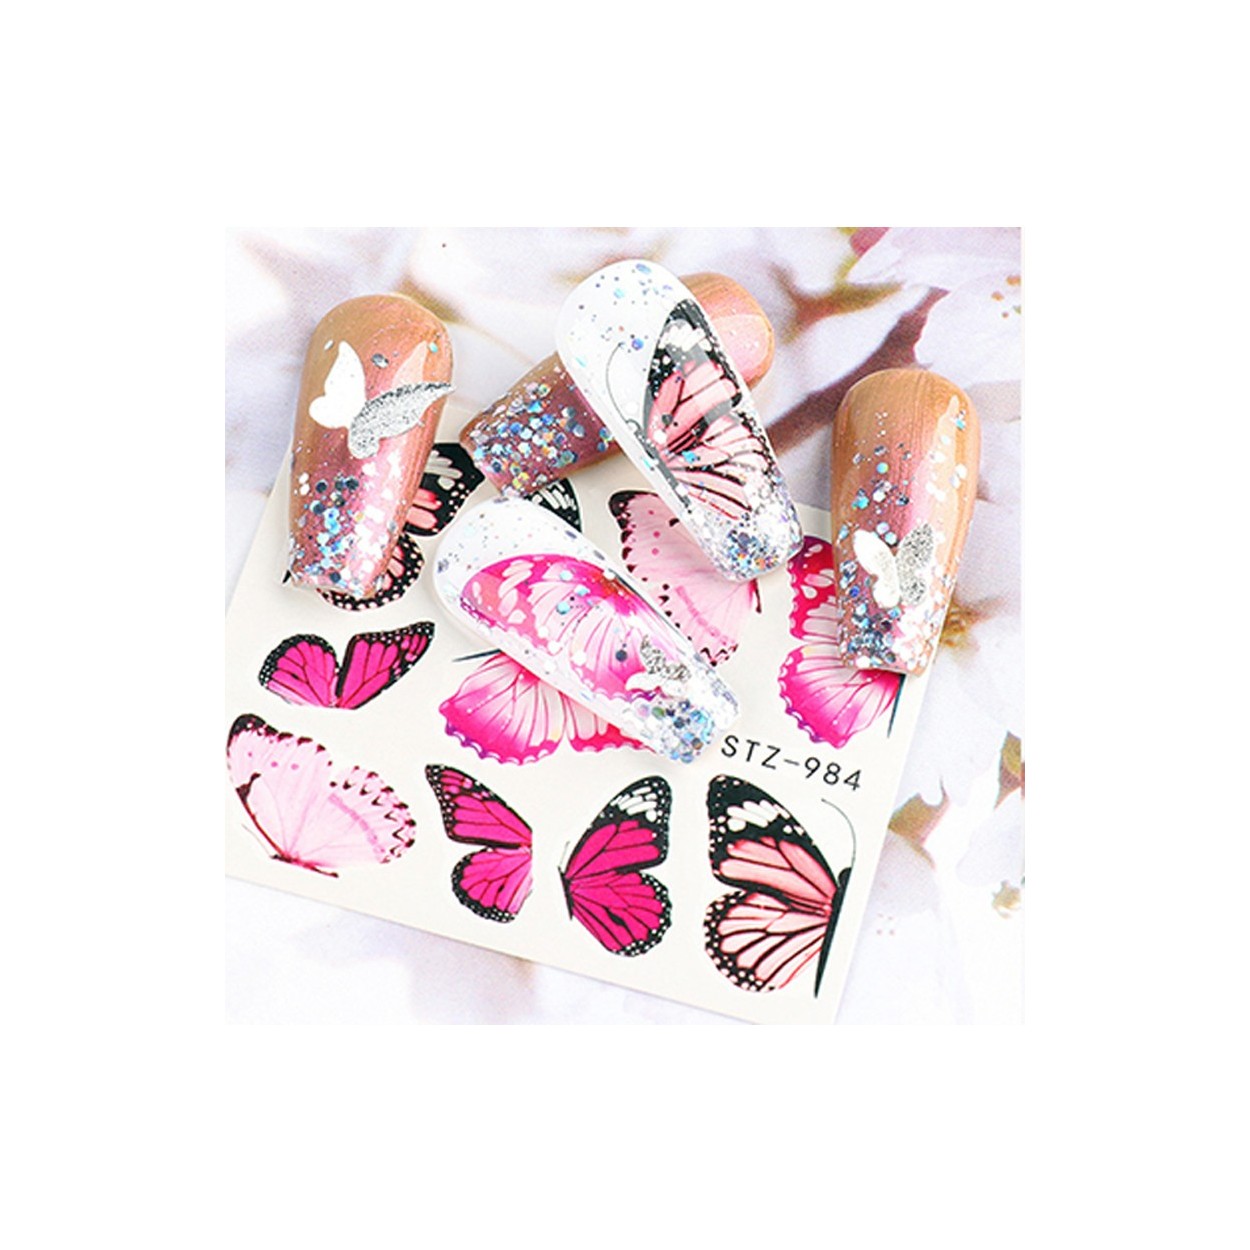 Stickers Schmetterling Rosa STZ-984